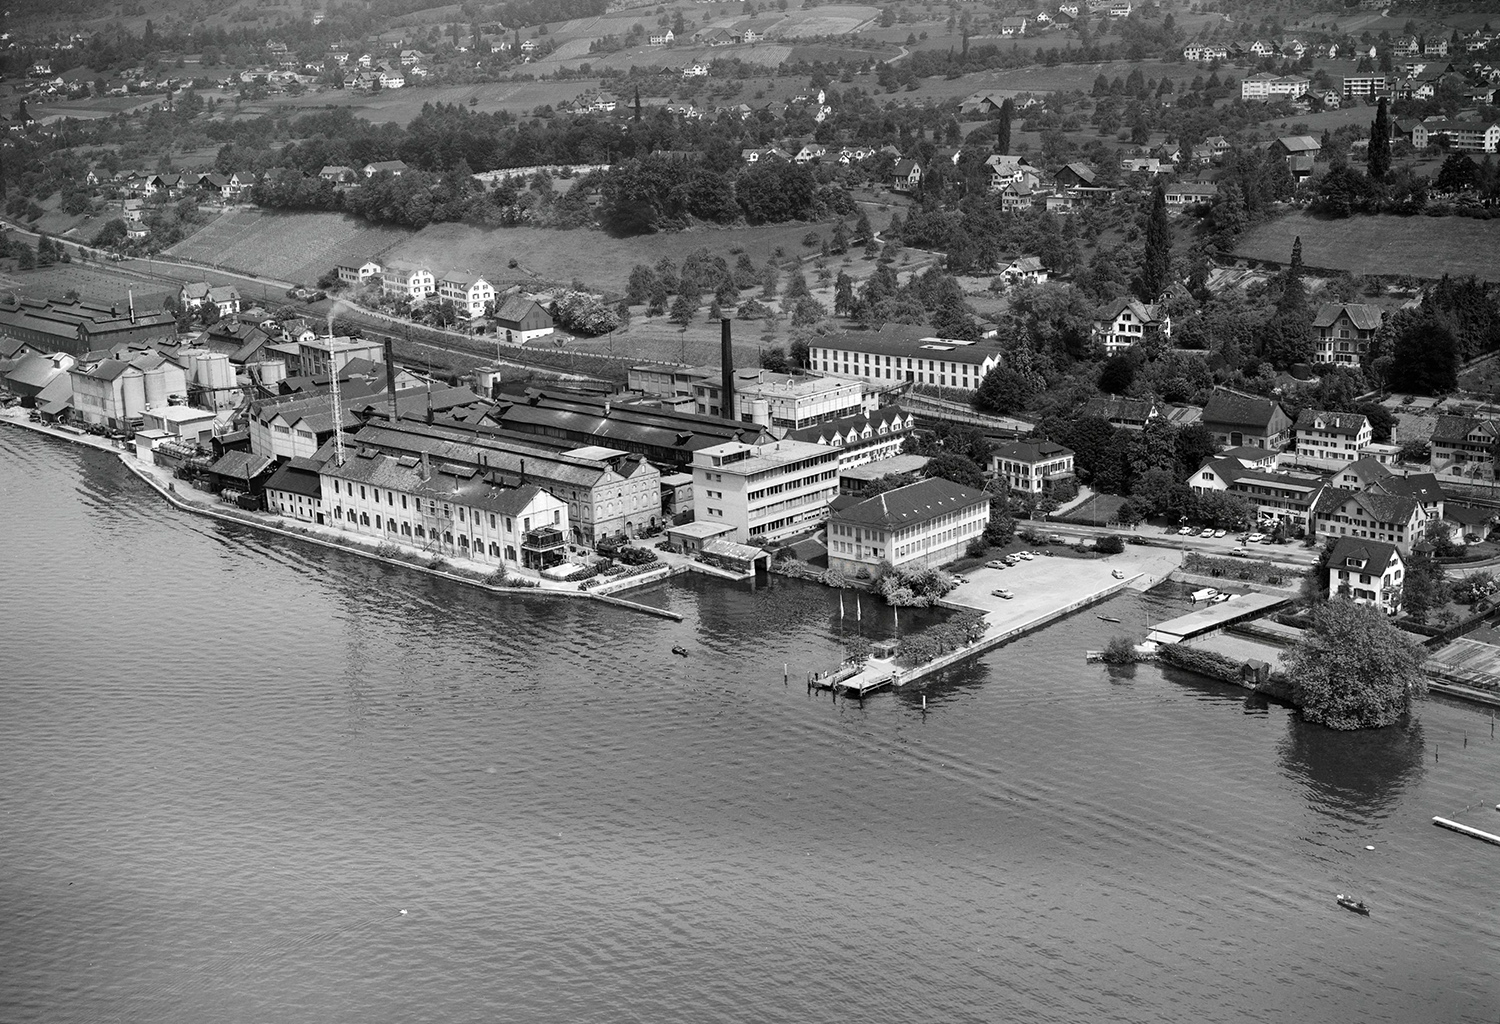 Chemische Fabrik Uetikon, Foto: ETH Bibliothek, Bildarchiv, Comet Photo AG, 1962